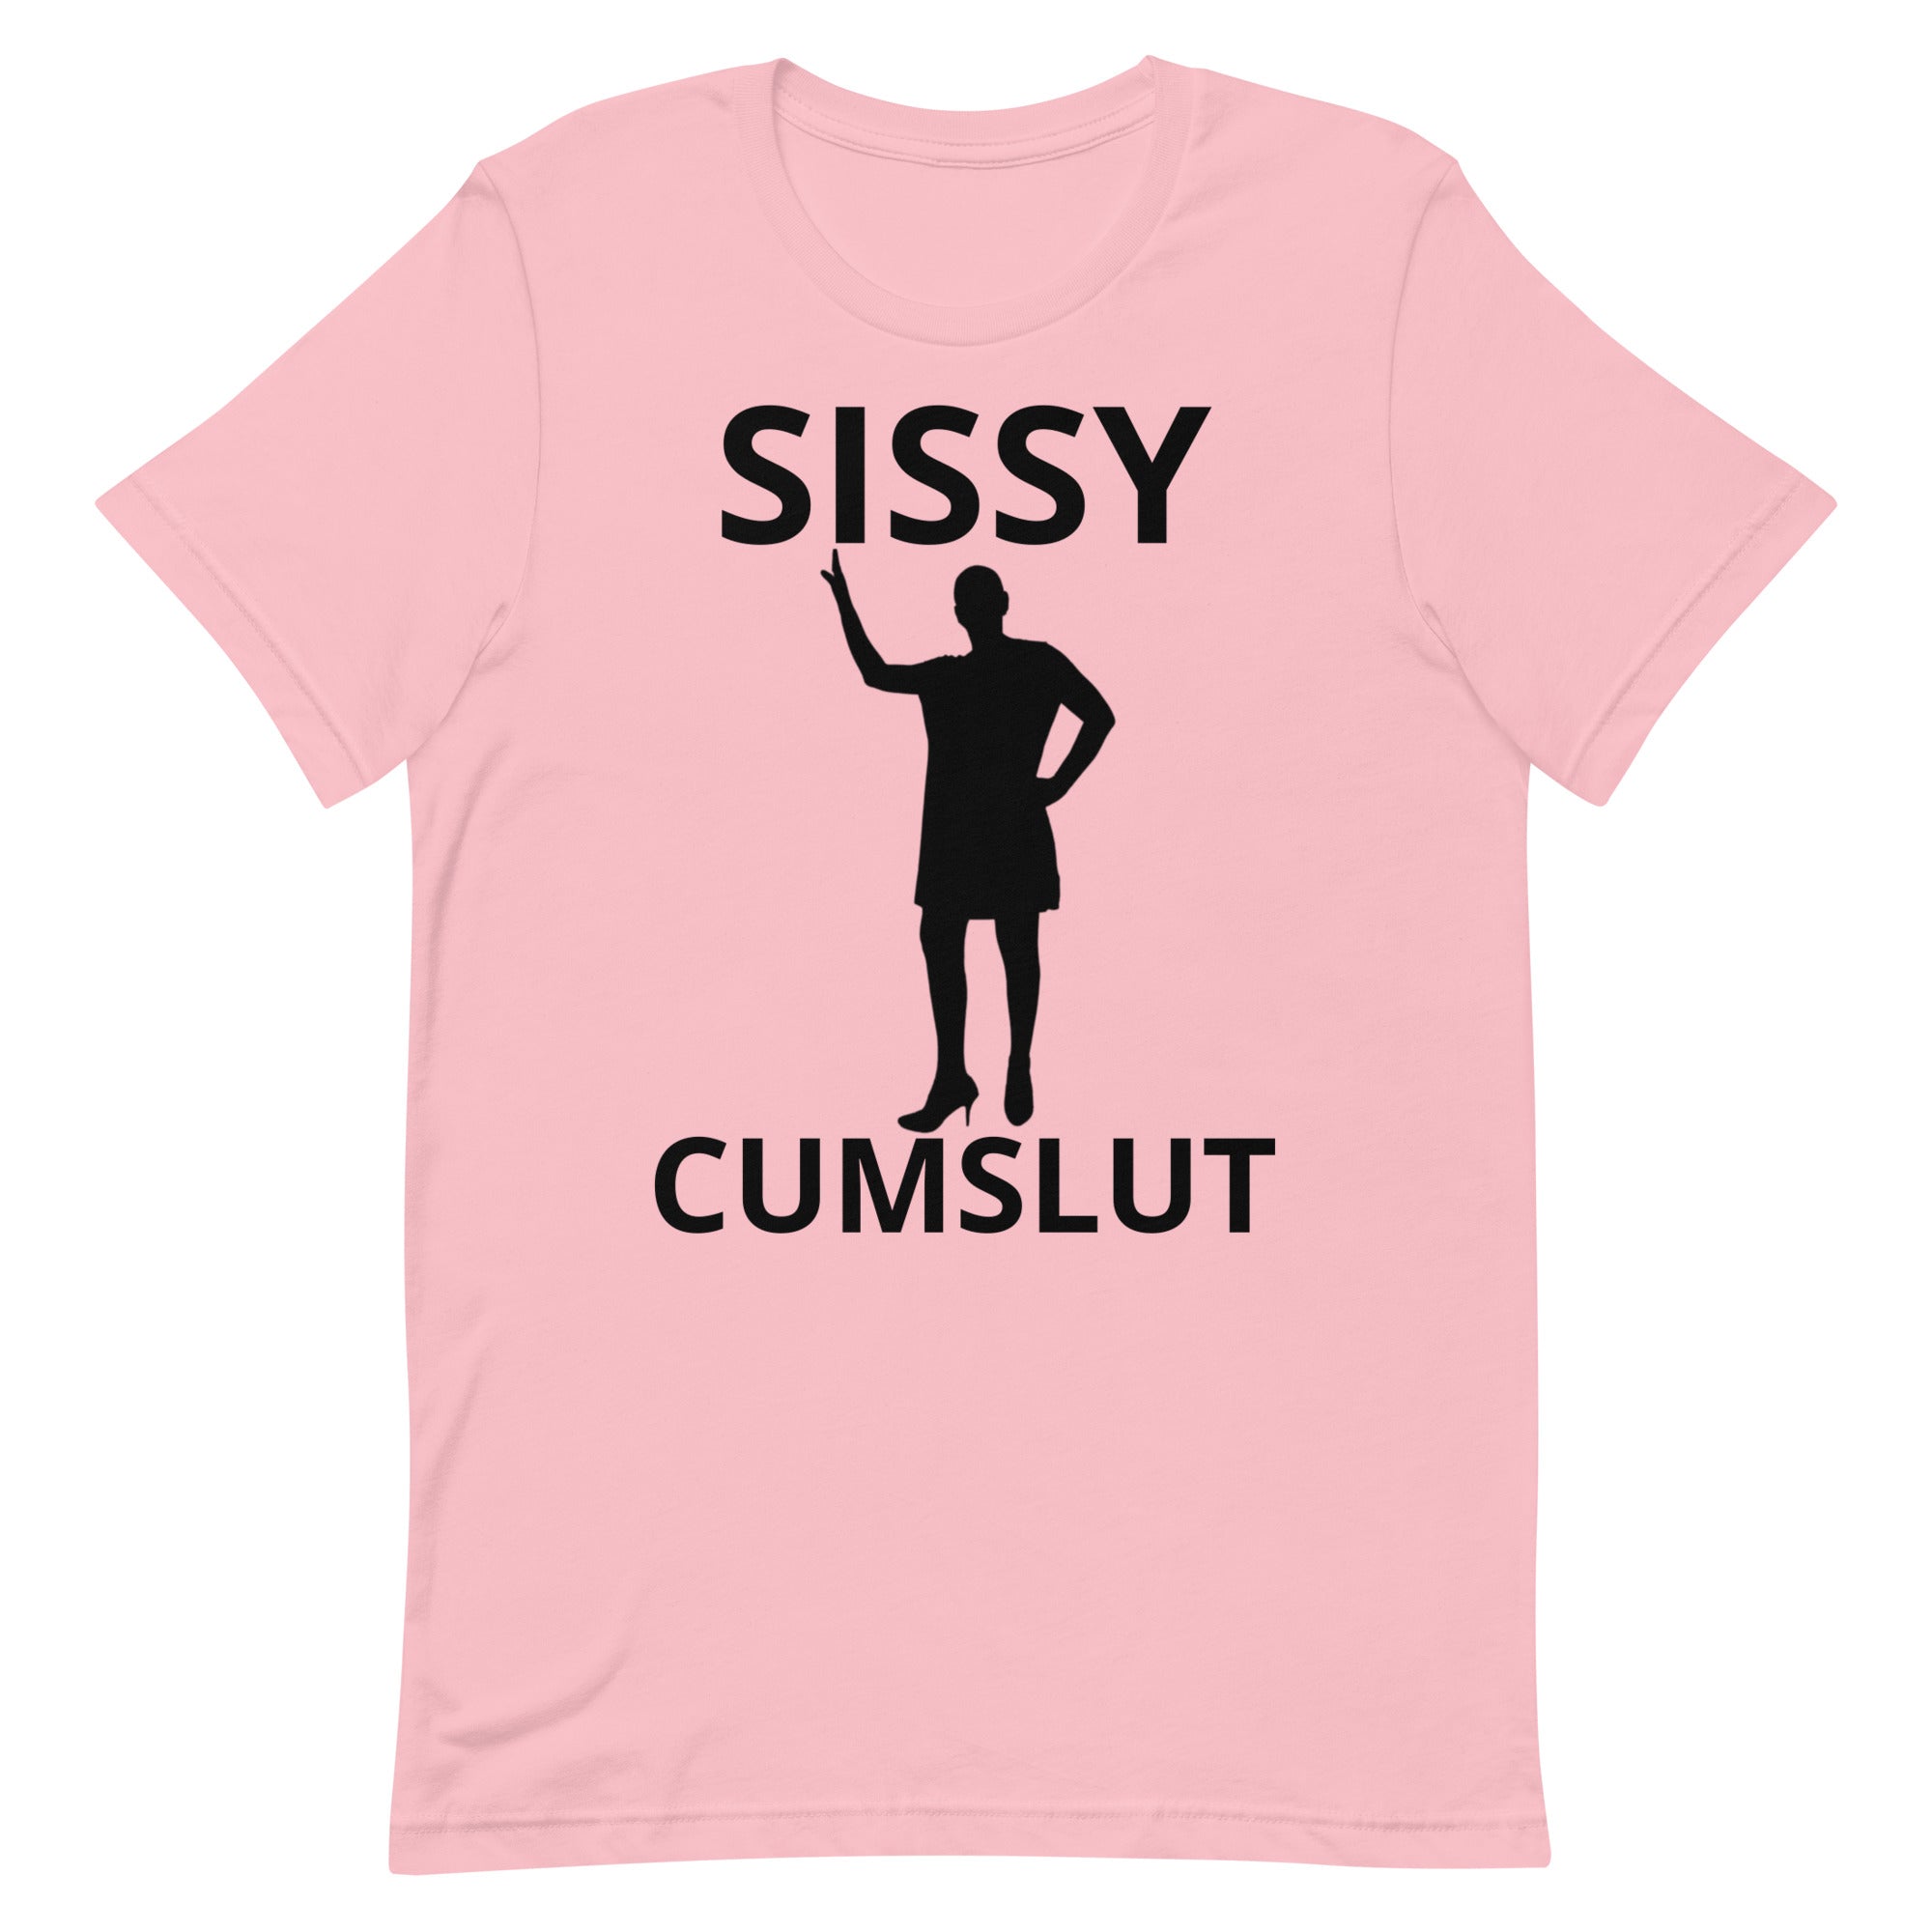 "Sissy Cumslut" Short-Sleeve t-shirt